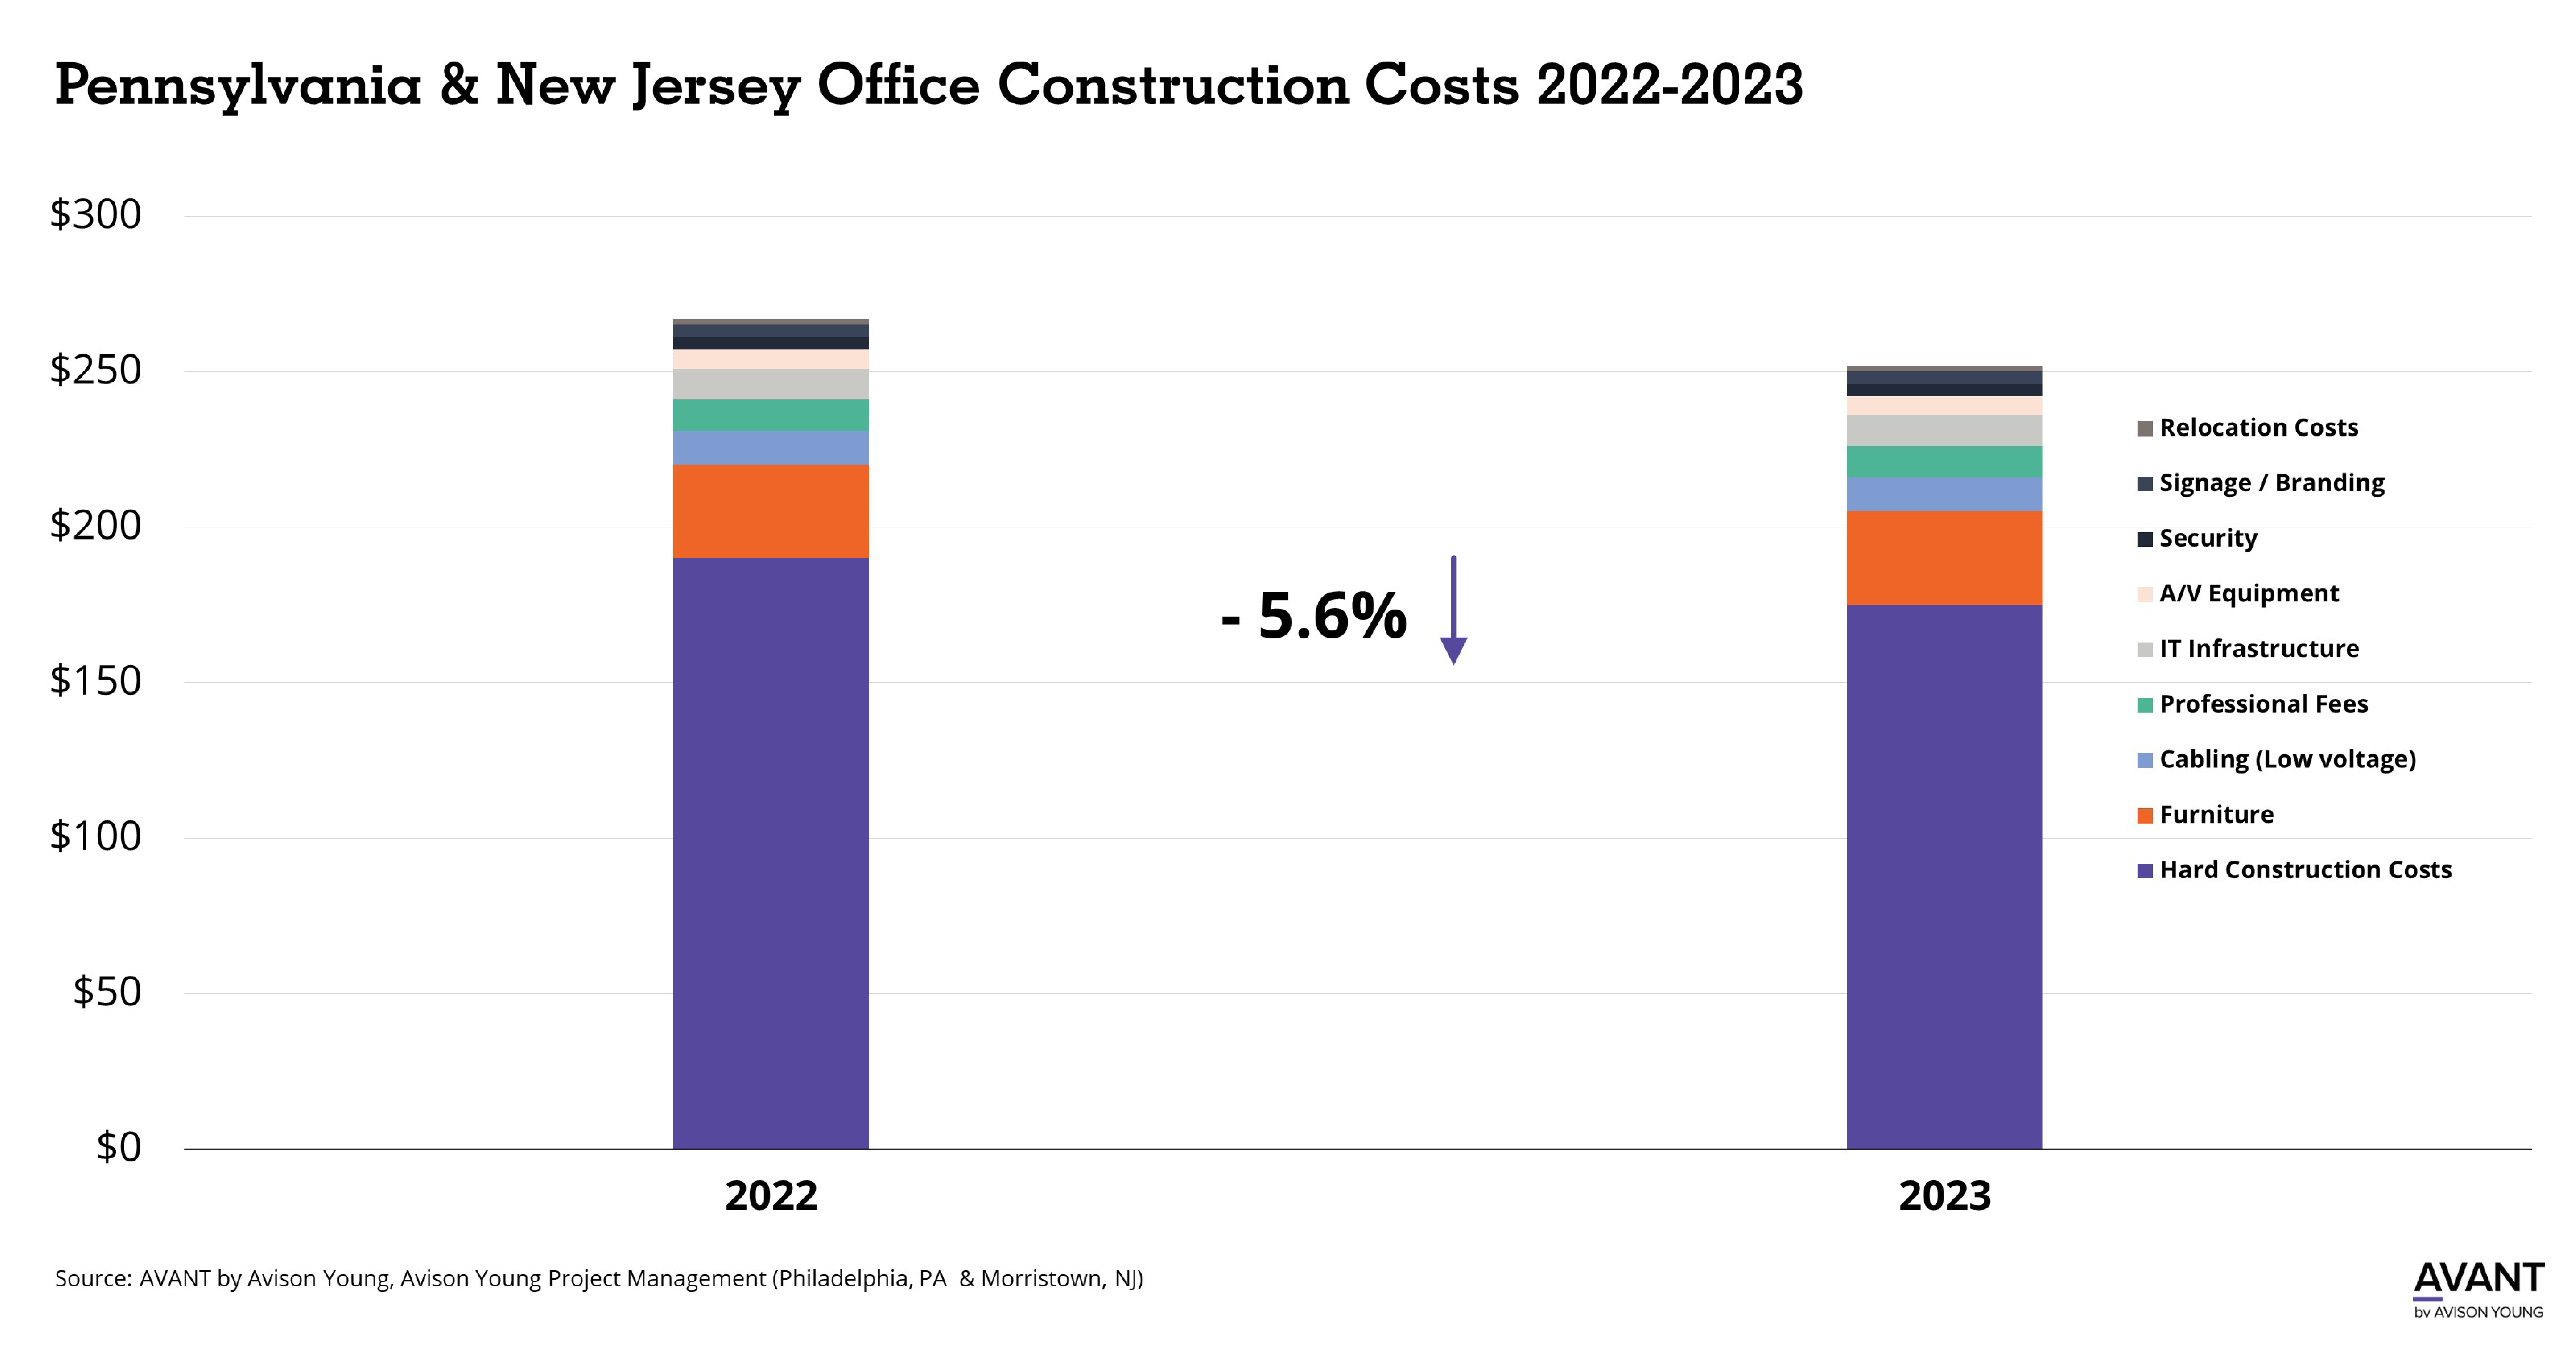 Pennsylvania & New Jersey Office Construction Costs 2022 vs 2023